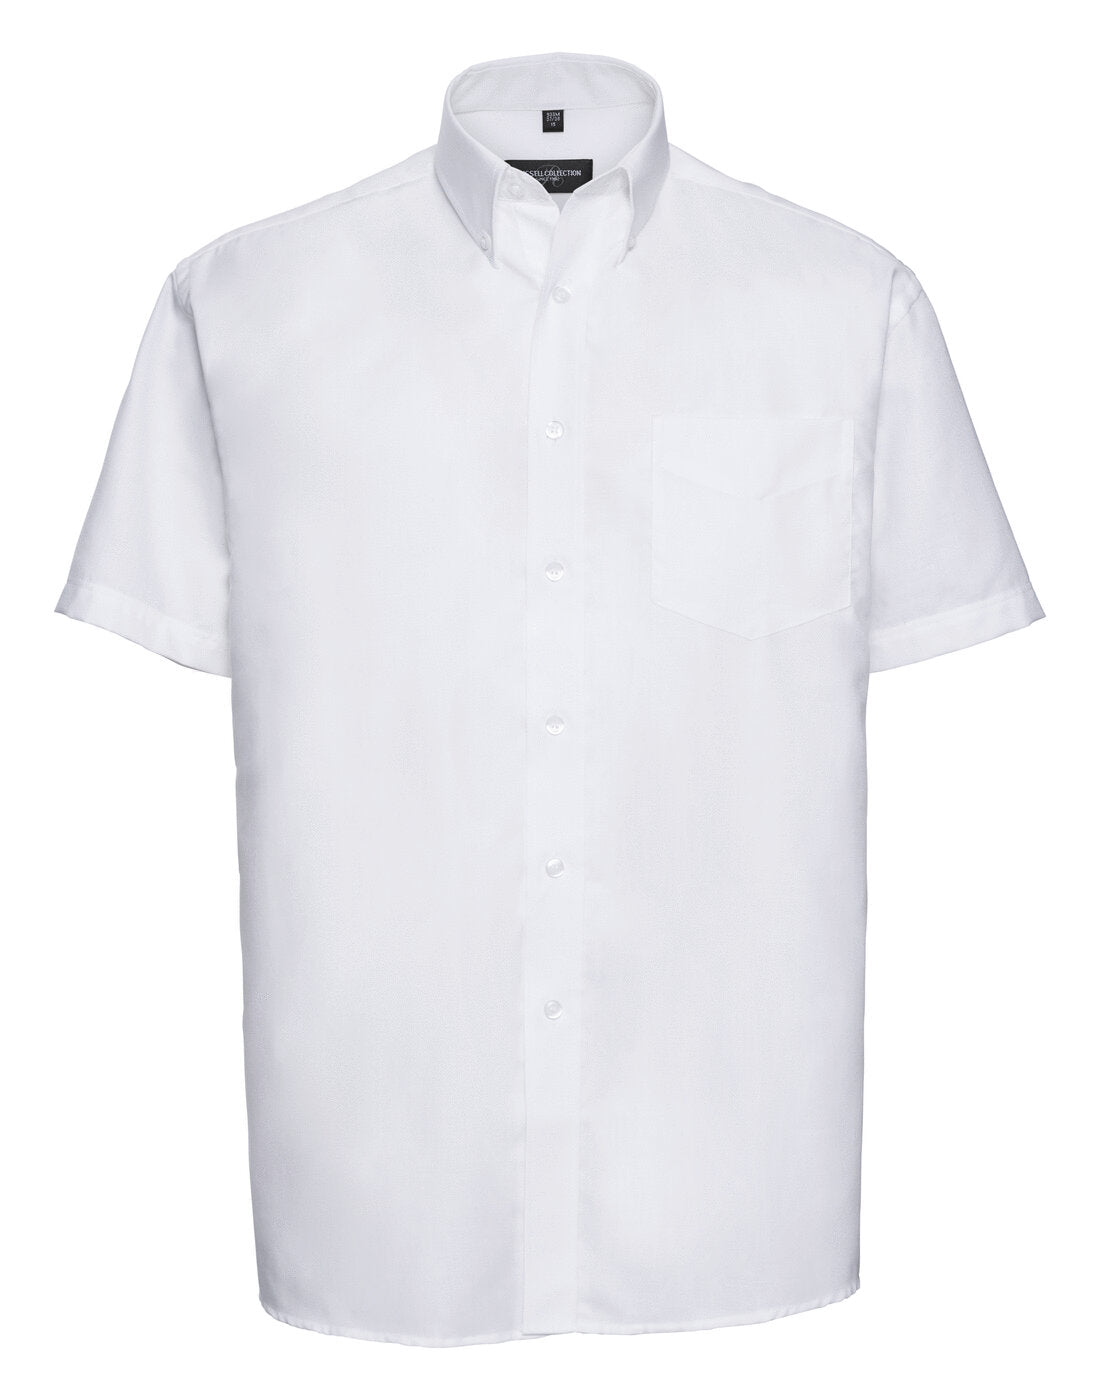 Russell Mens Short Sleeve Oxford Shirt White